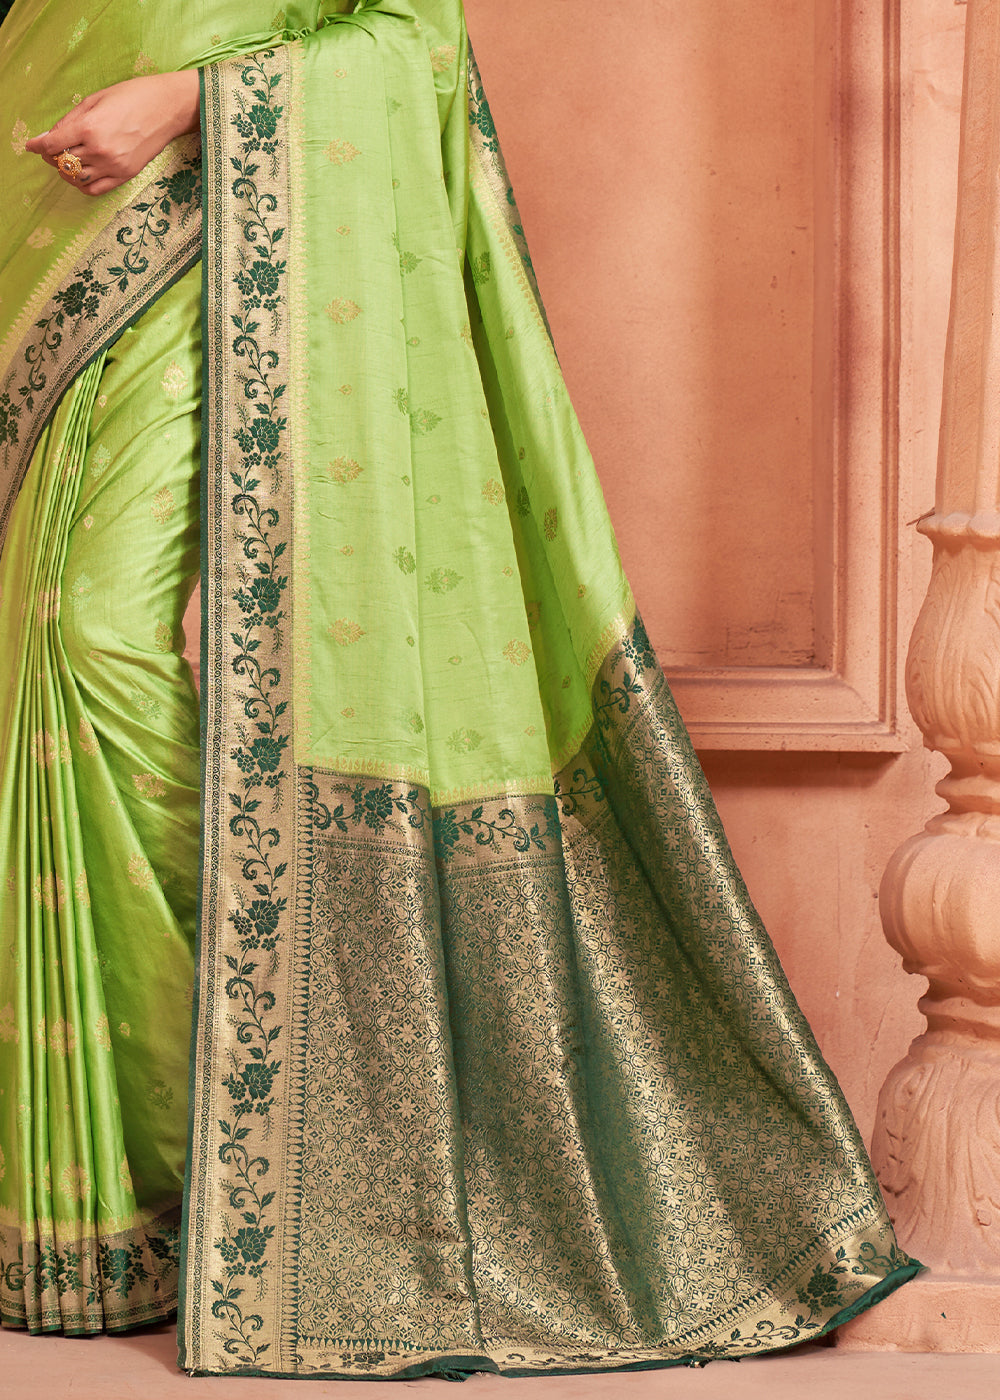 Pastel Green Satin Silk Saree with Overall Butti work